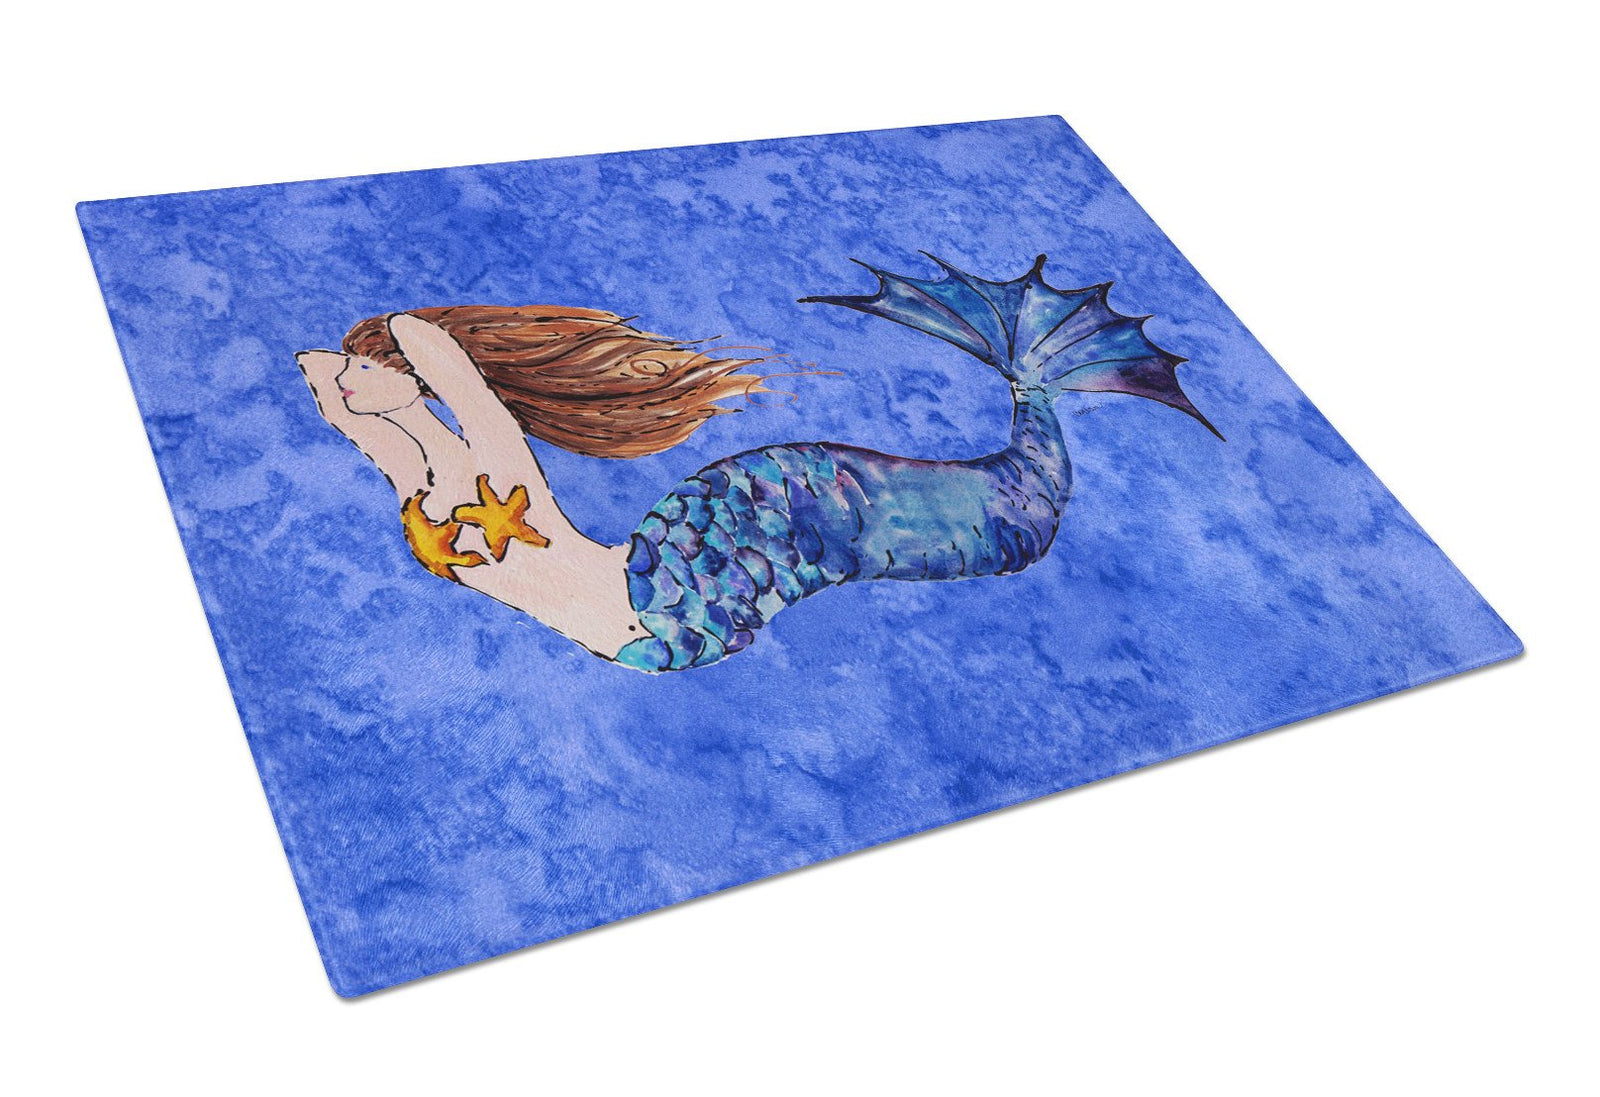 Brunette Mermaid on Blue Glass Cutting Board Large 8725LCB by Caroline's Treasures